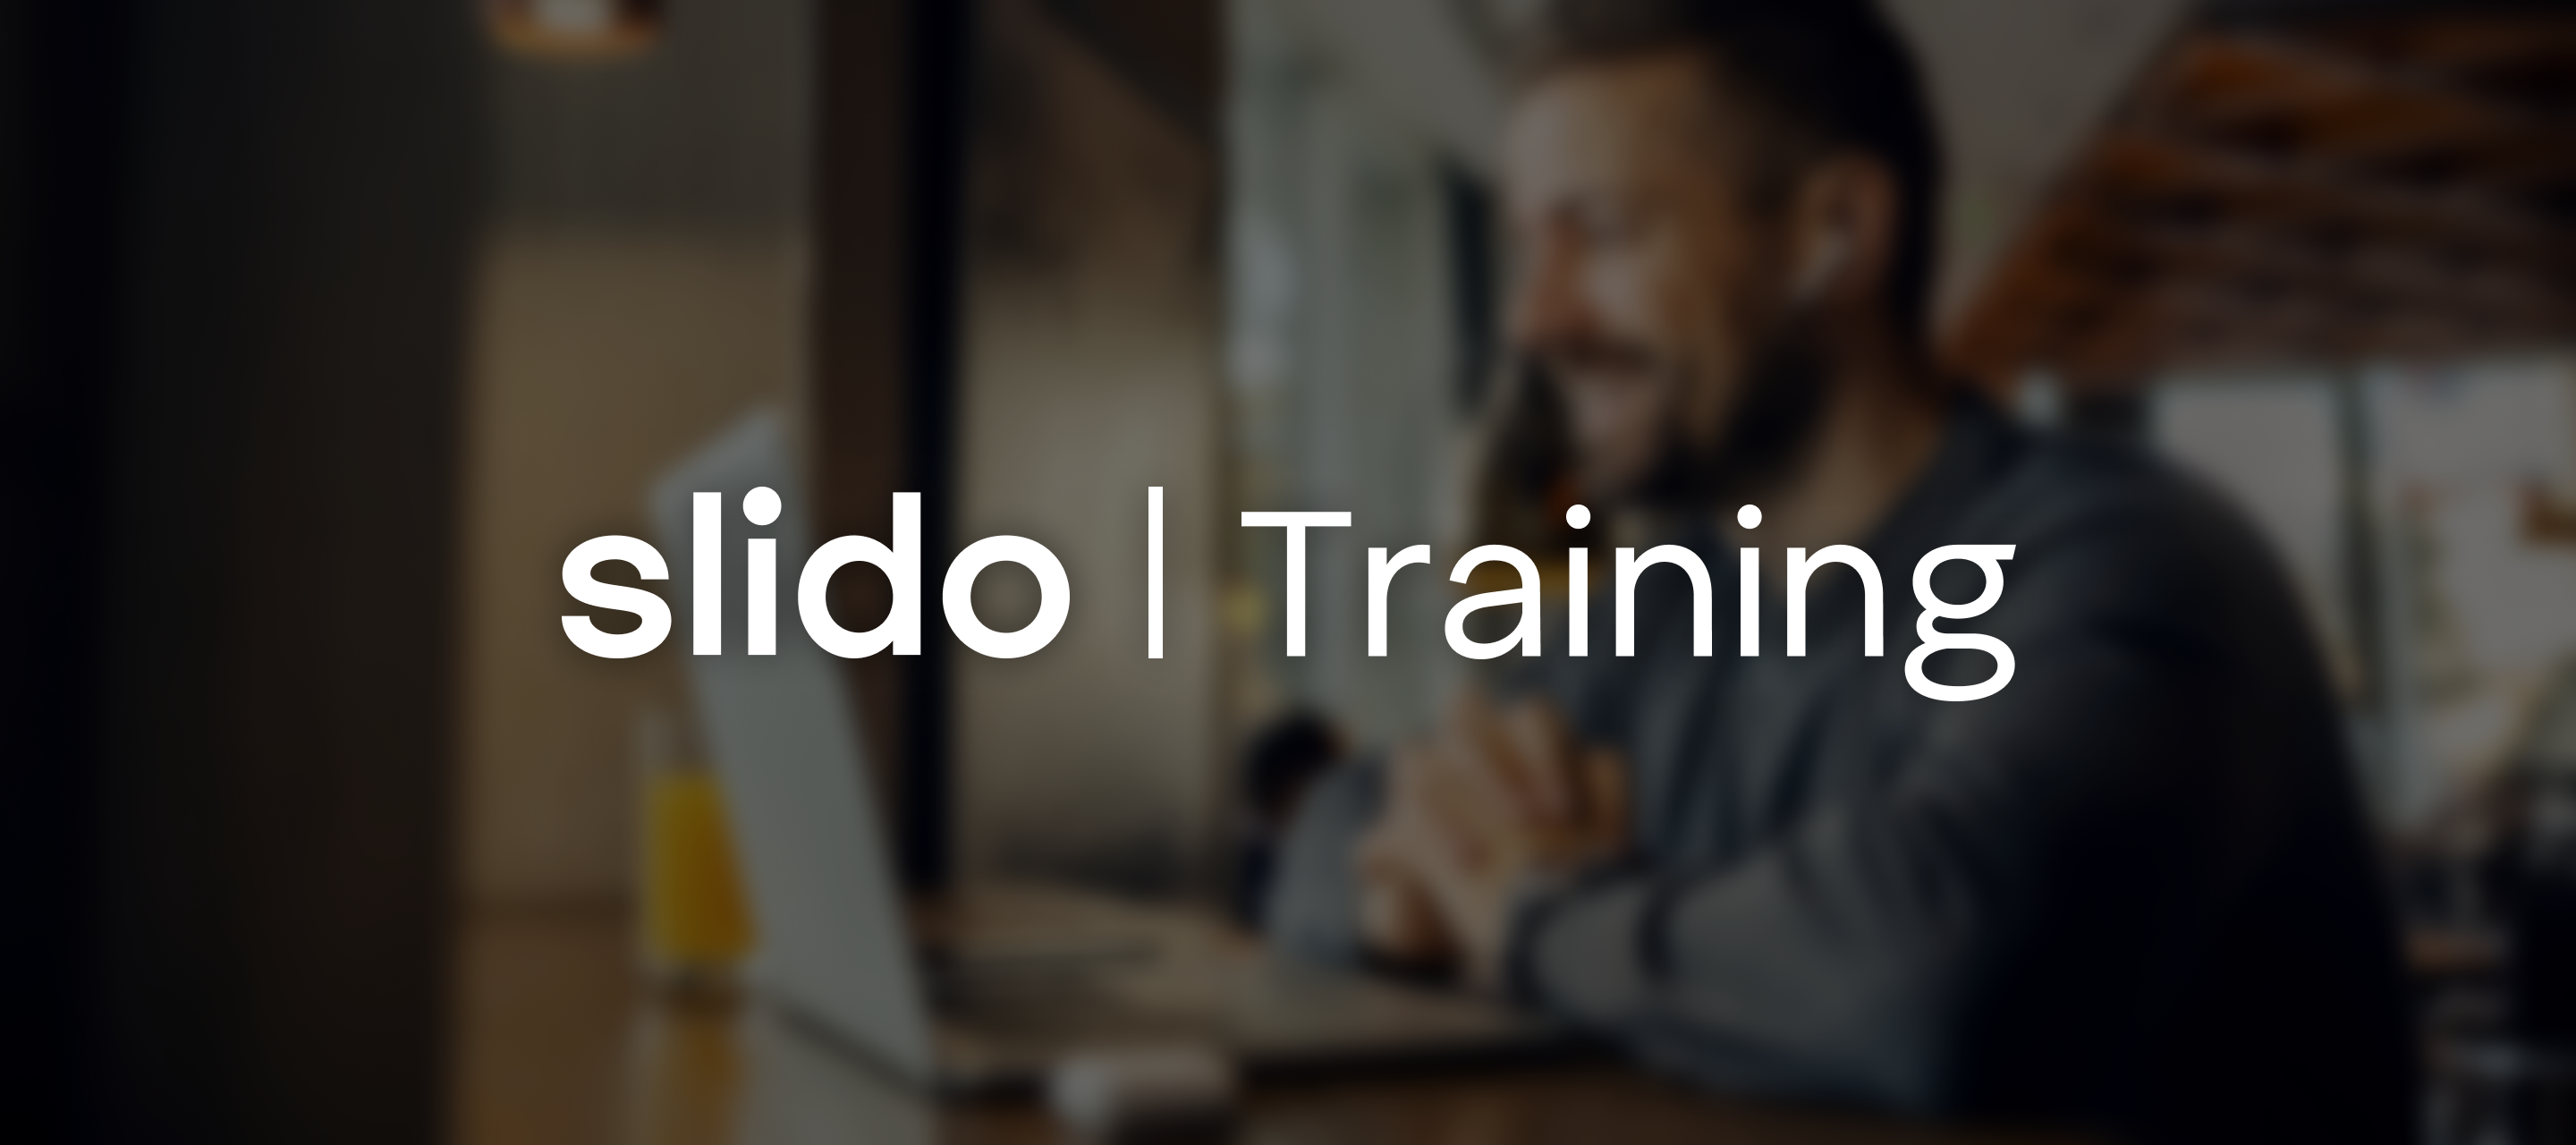 Slido Enterprise Training: Getting Started with Slido